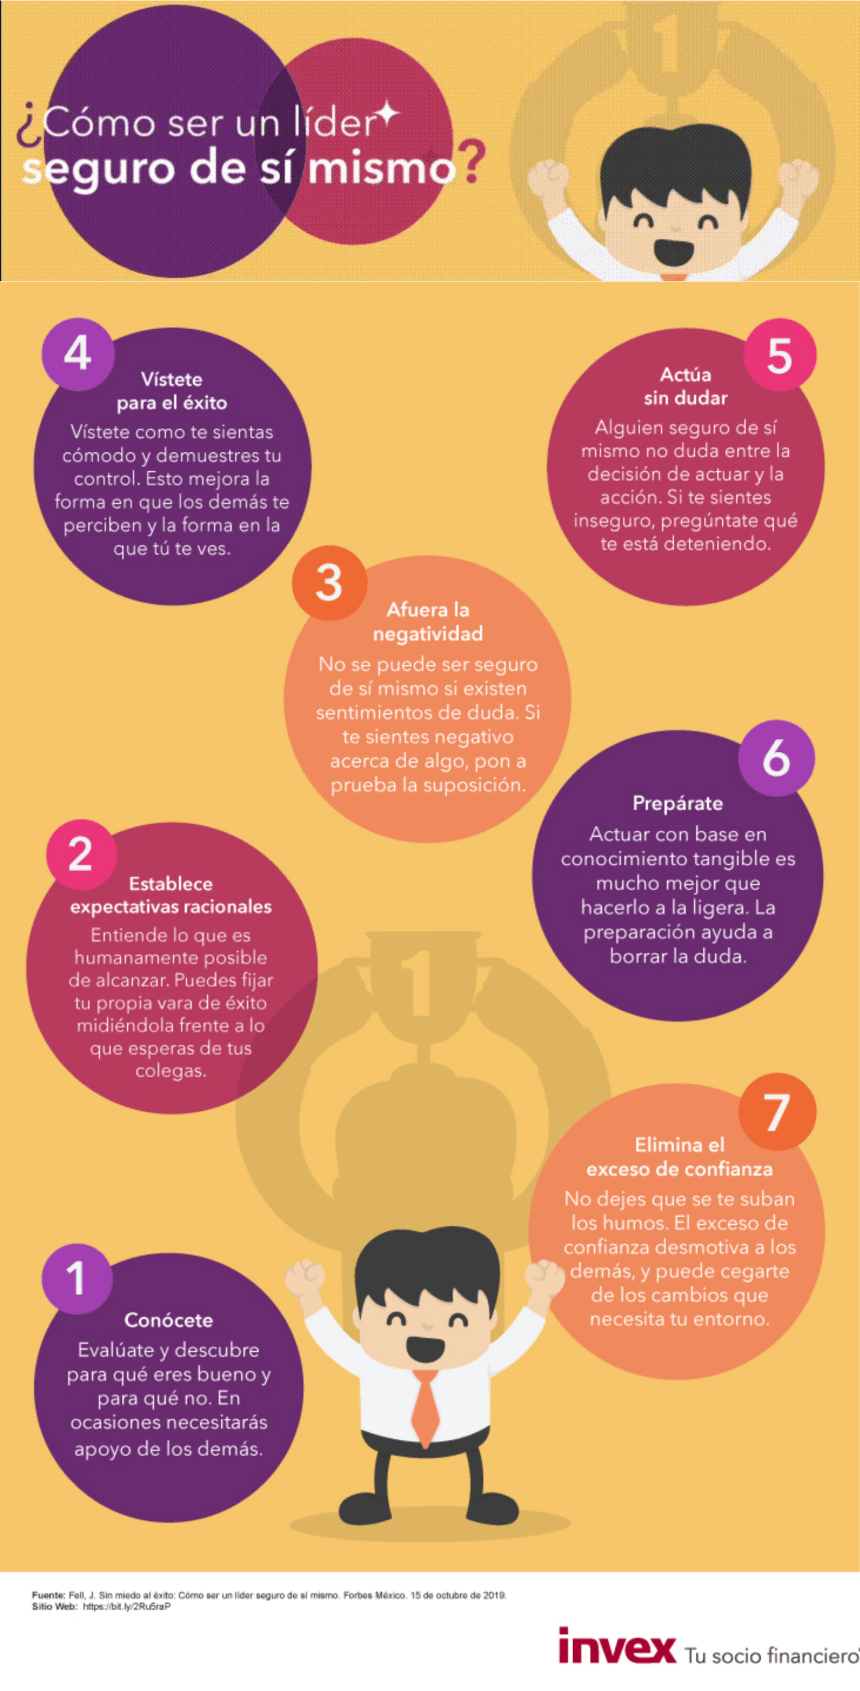 9 frases que un líder nunca dice #infografia #infographic